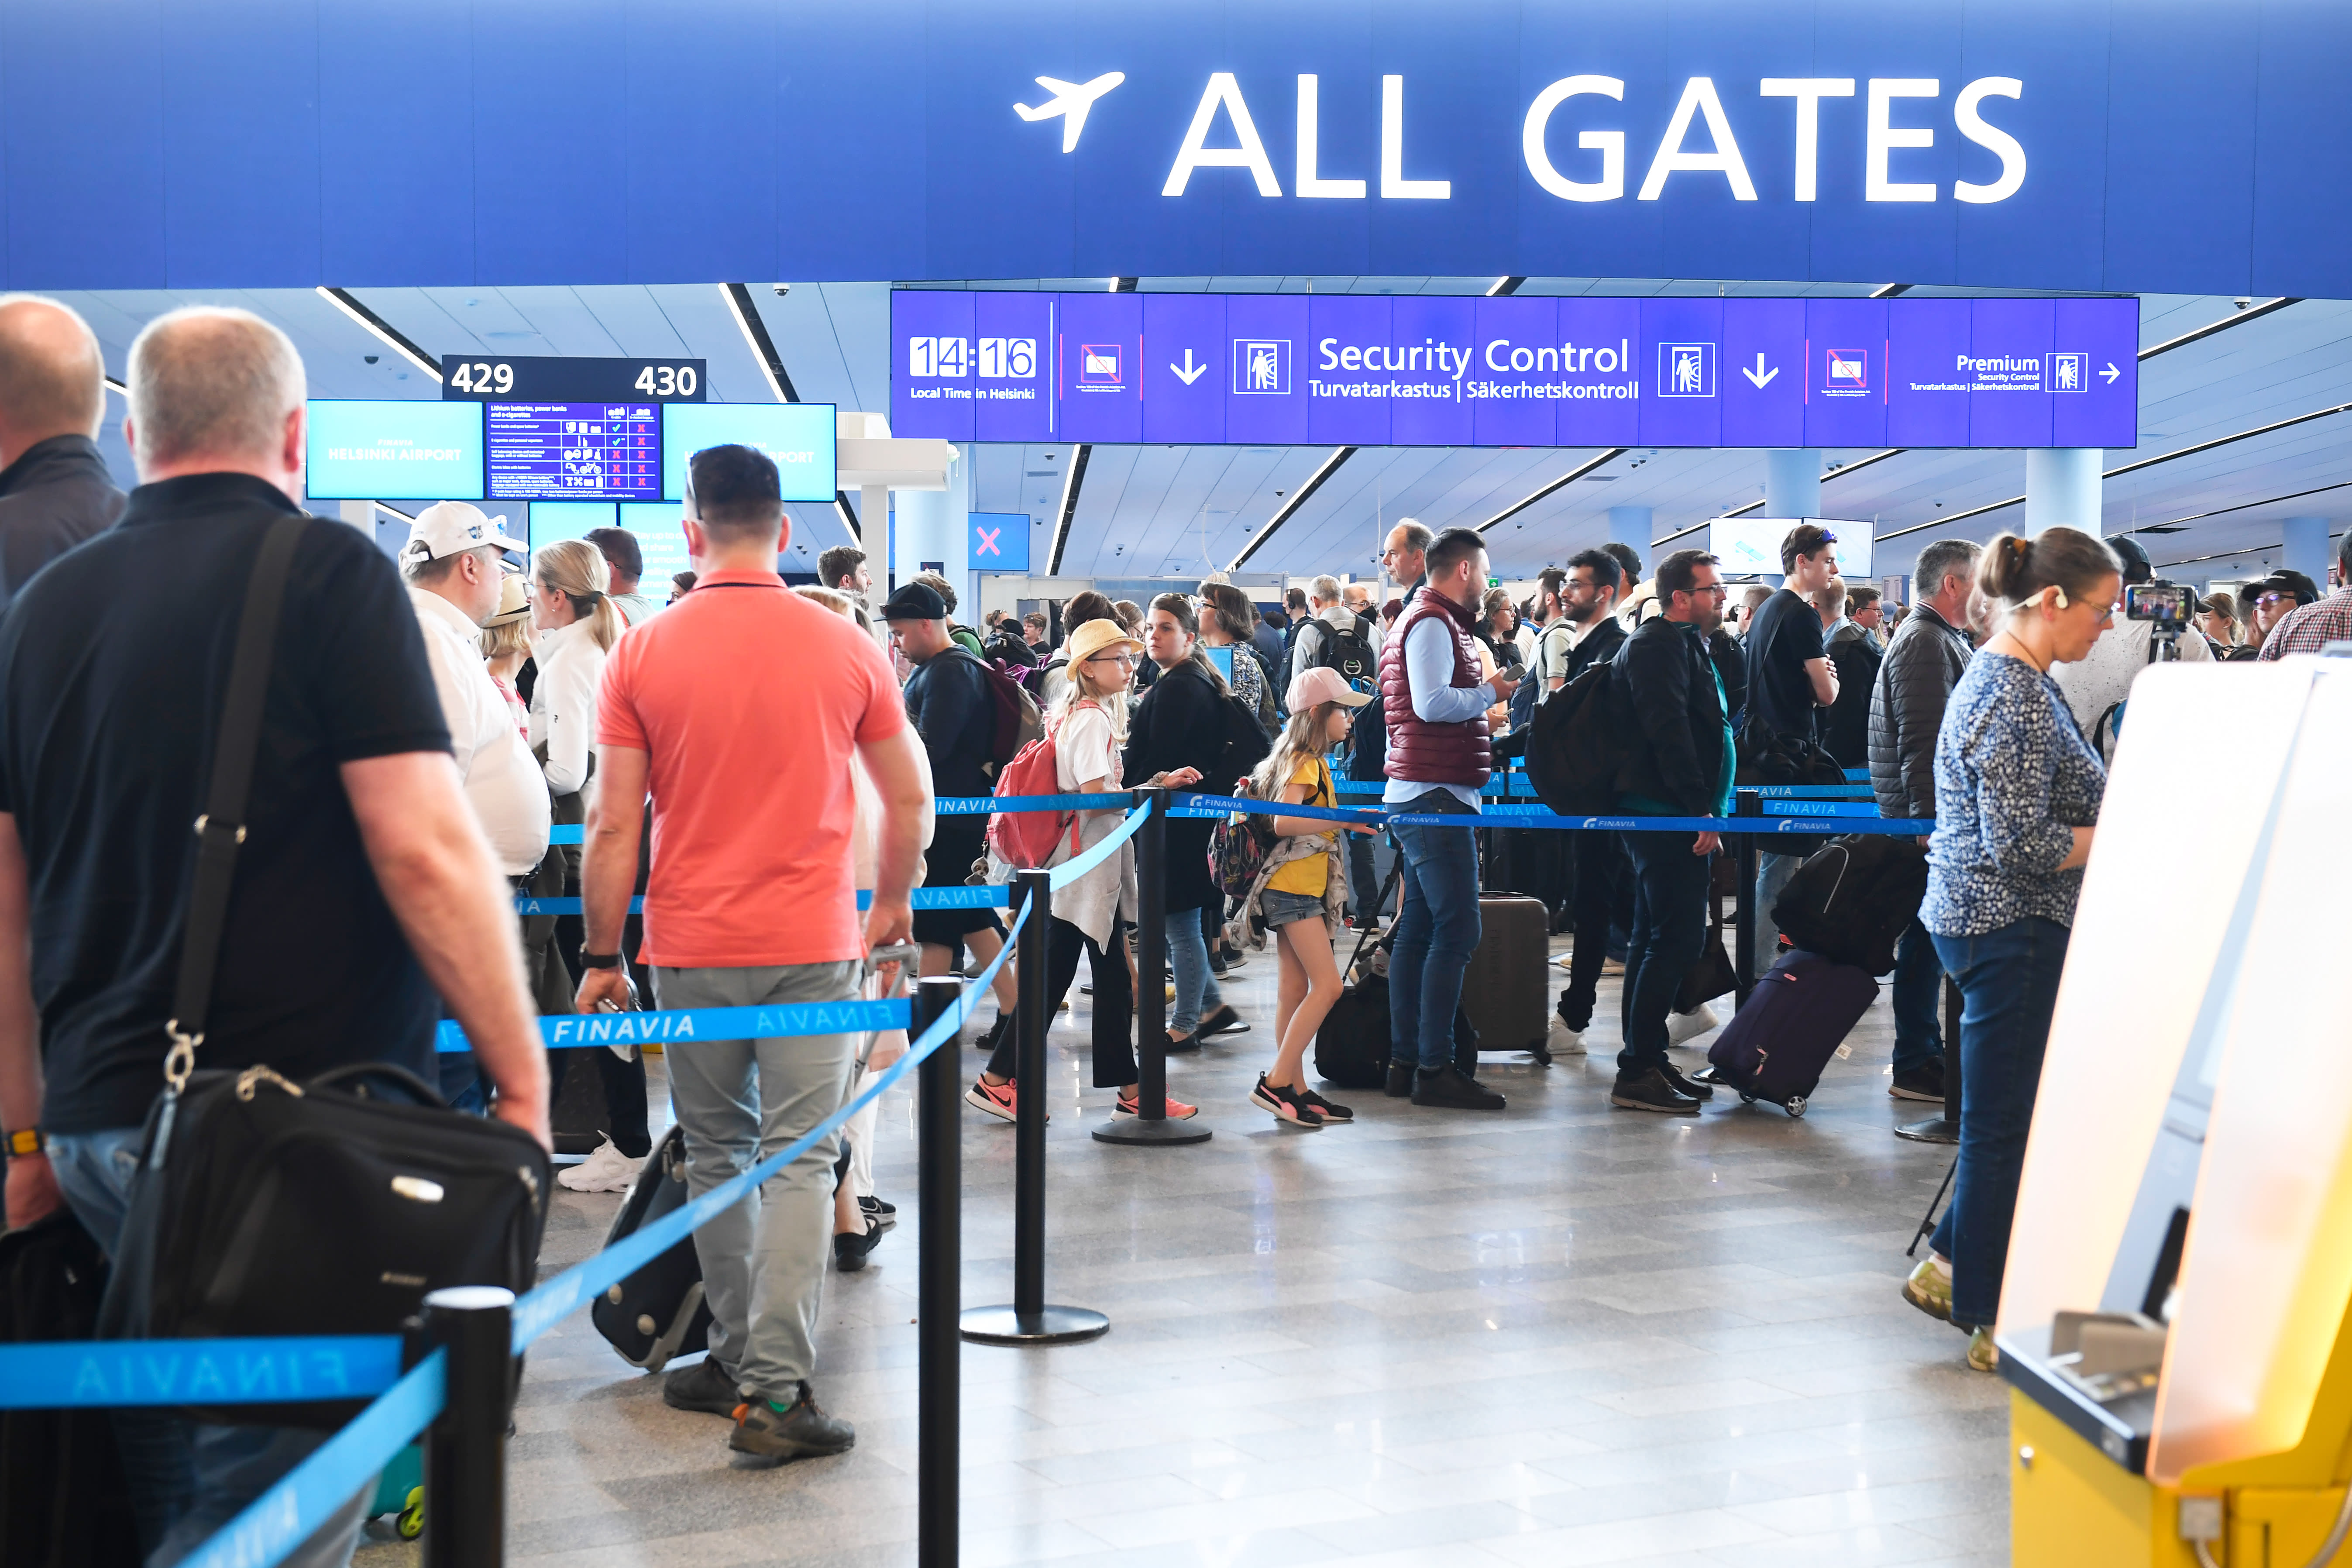 Finavia warns passengers to be prepared for long queues in Helsinki-Vantaa